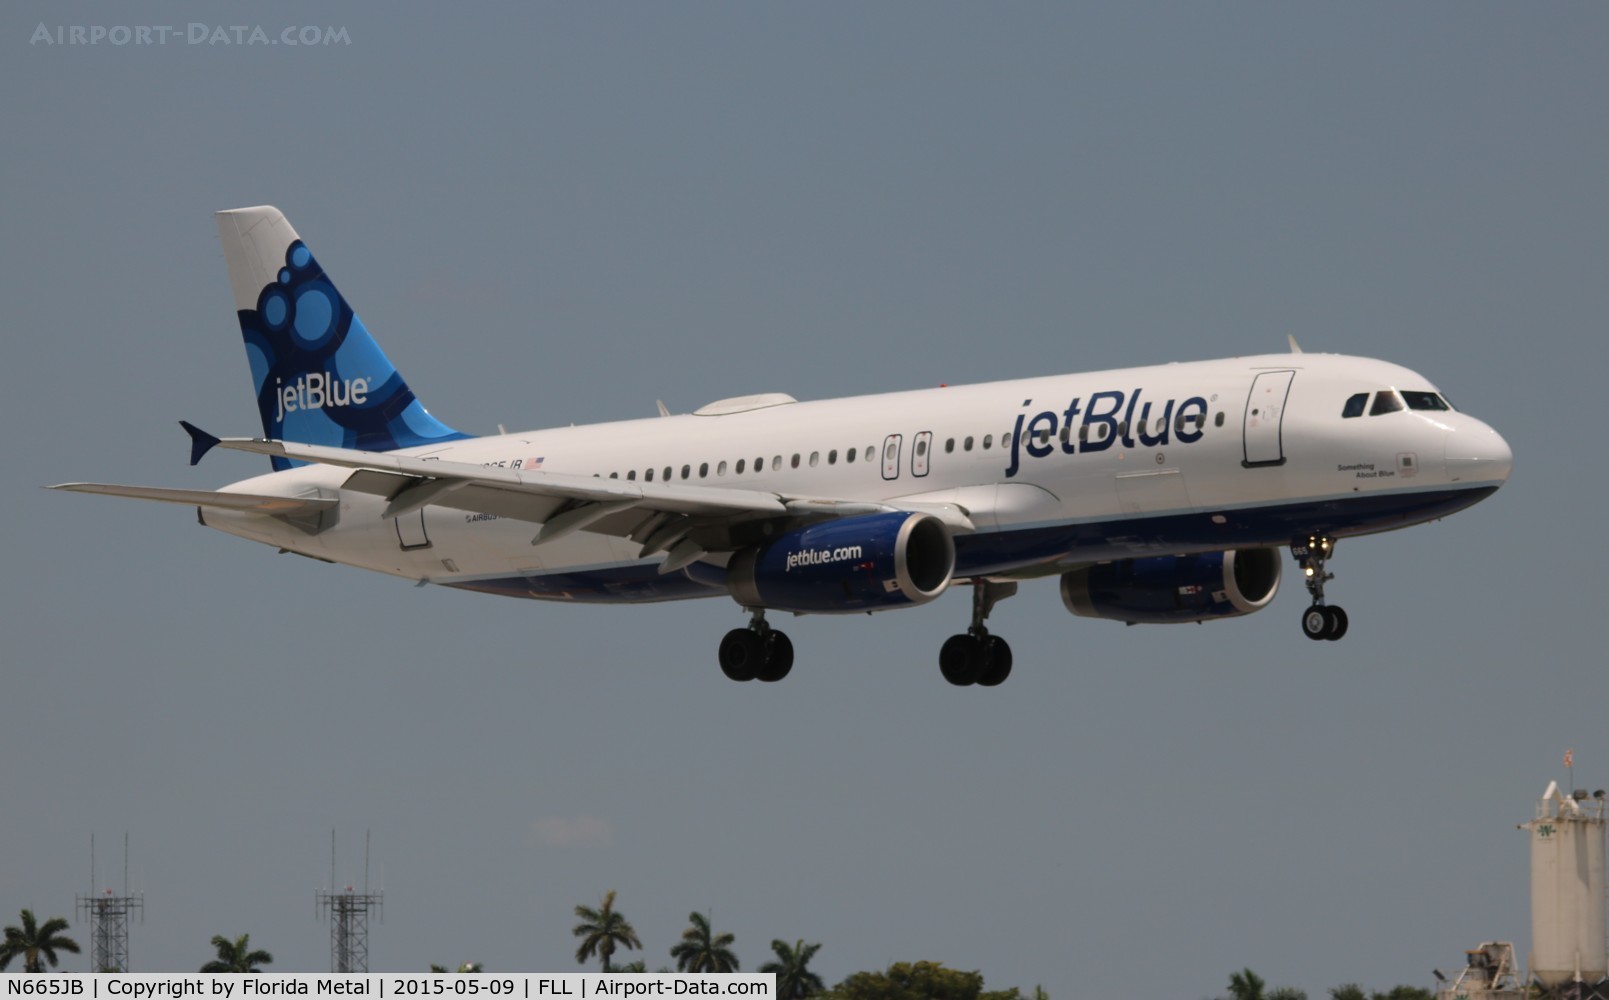 N665JB, 2007 Airbus A320-232 C/N 3348, Jet Blue